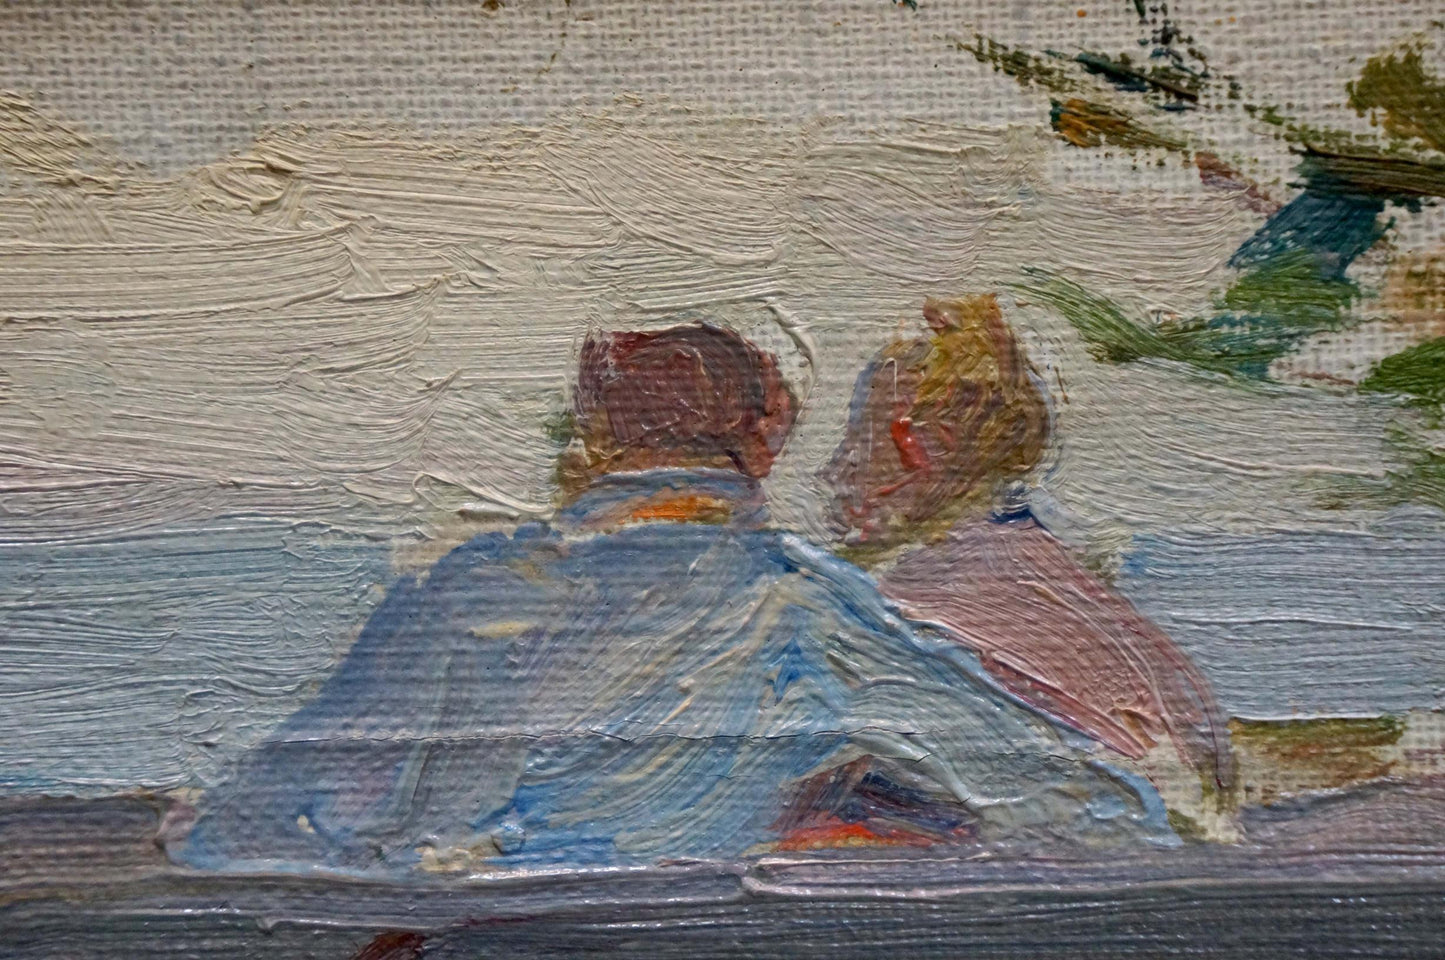 Oil painting Couple on vacation Tsvetkova V. P.